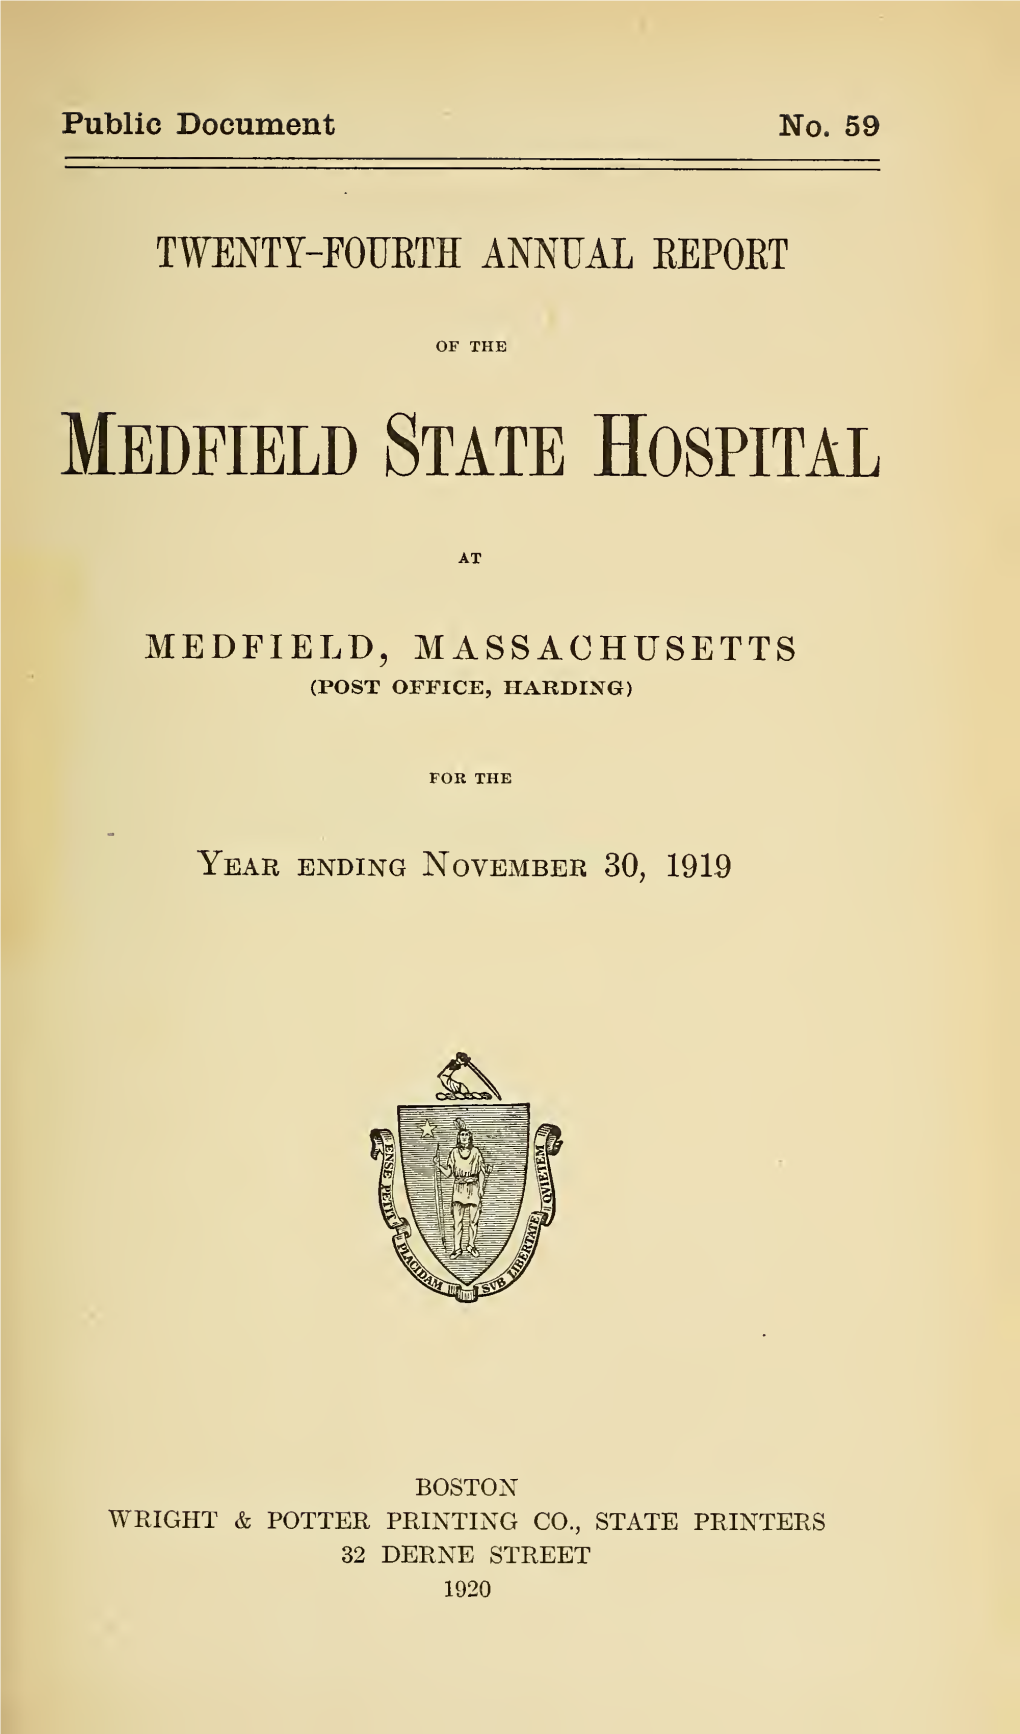 Annual Report of the Medfield State Hospital at Medfield, Massachusetts